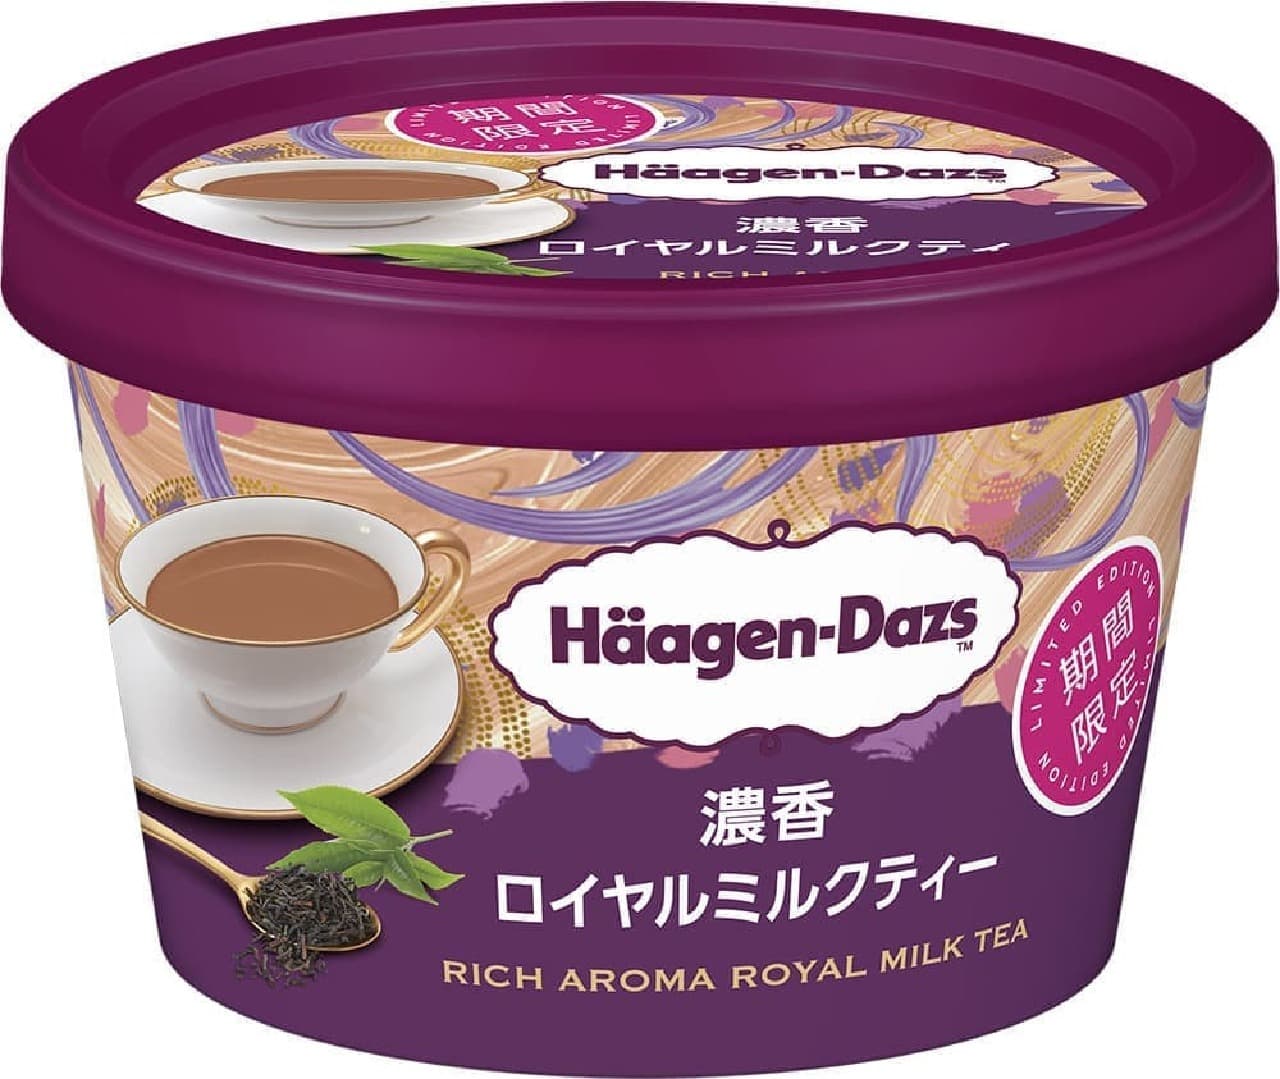 Haagen-Dazs "Nokou Royal Milk Tea"